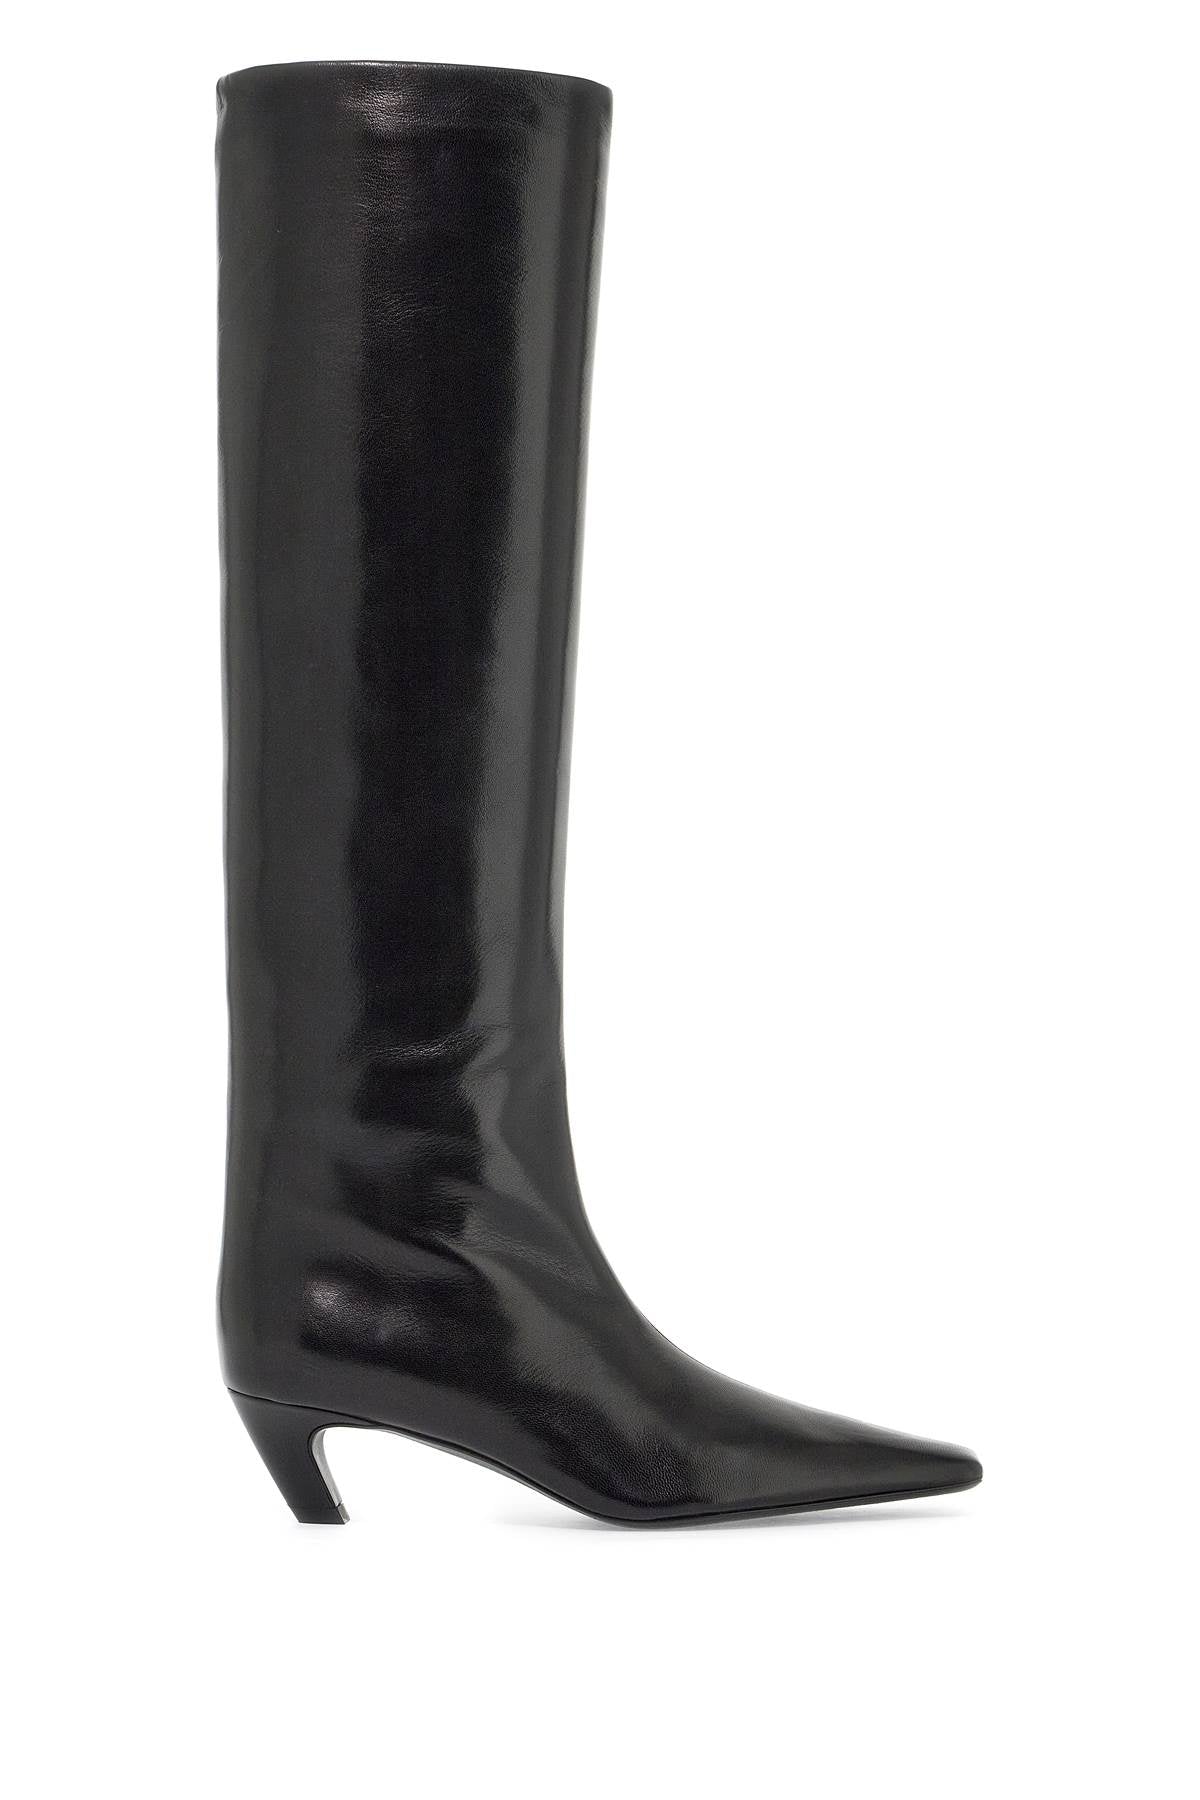 Khaite davis knee-high shiny leather boots - Black